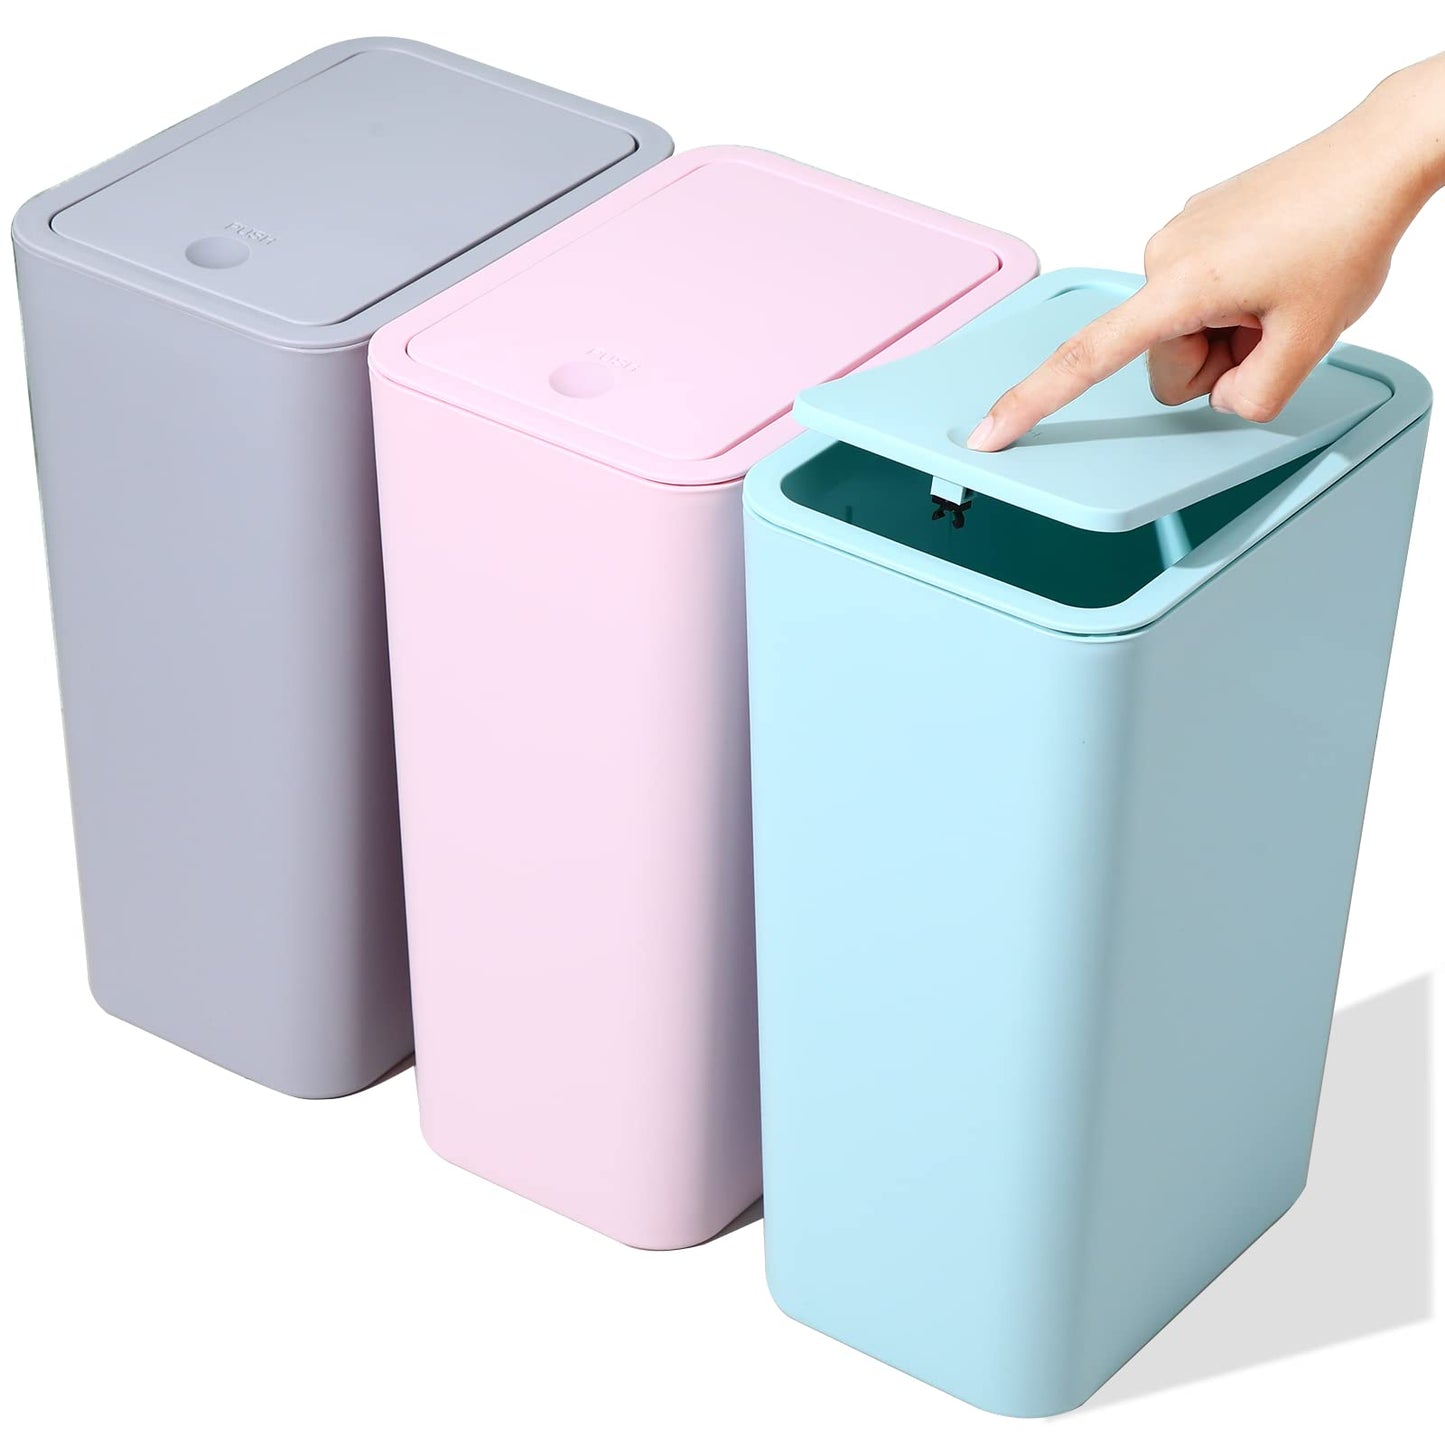 3 Pack Bathroom Small Trash Can with Lid,10L / 2.6 Gallon Slim Garbage Bin Wastebasket with Pop-Up Lid for Bedroom, Office, Kitchen, Craft Room, Fits Under Desk/Cabinet/Sink